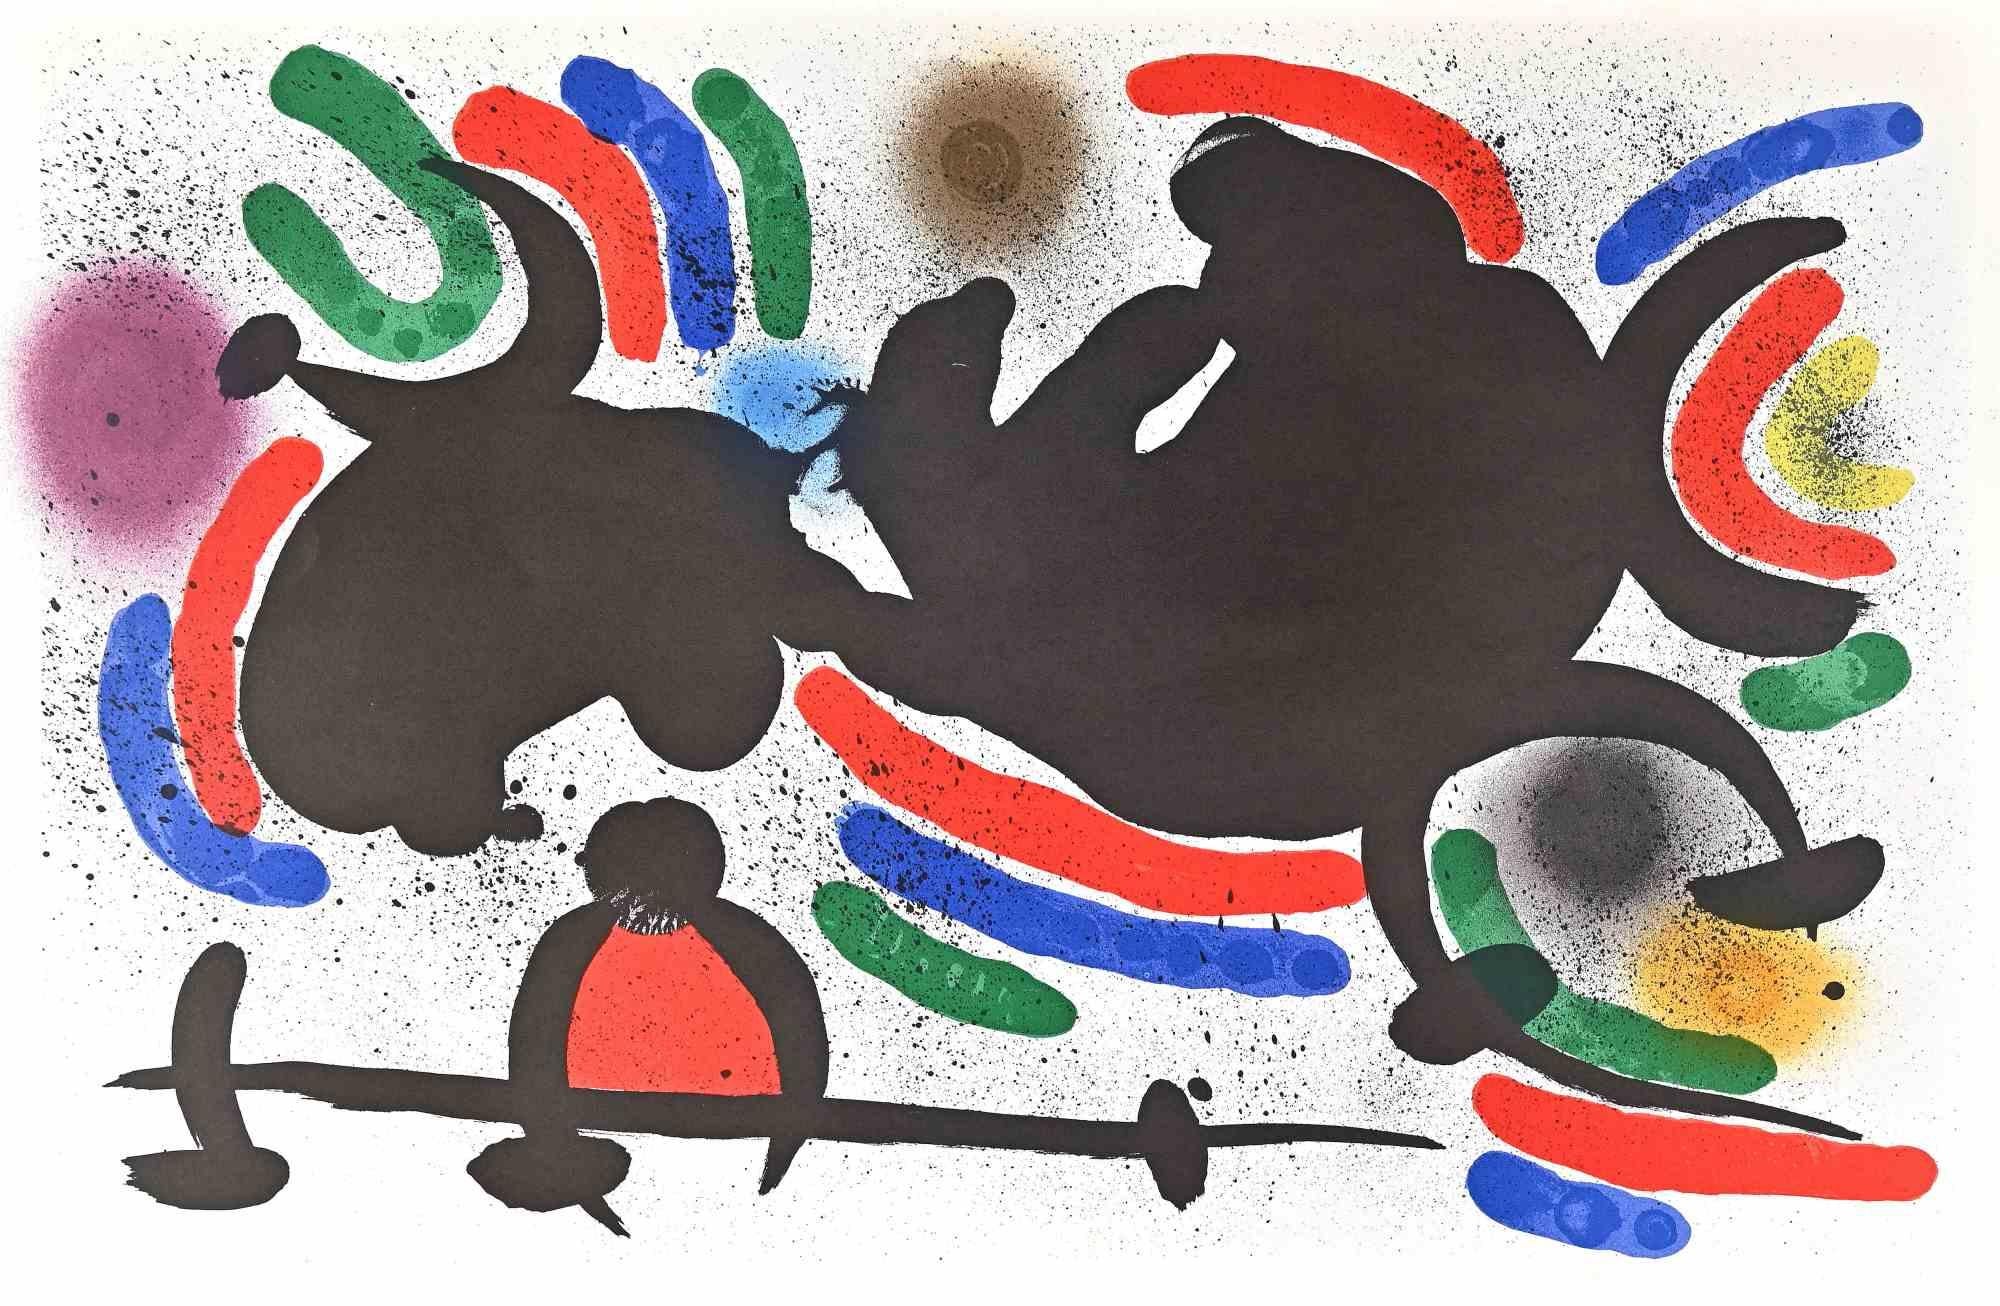 Joan Miró Abstract Print - Mirò Litograph II, no. IV  - Lithograph by Joan Mirò - 1974